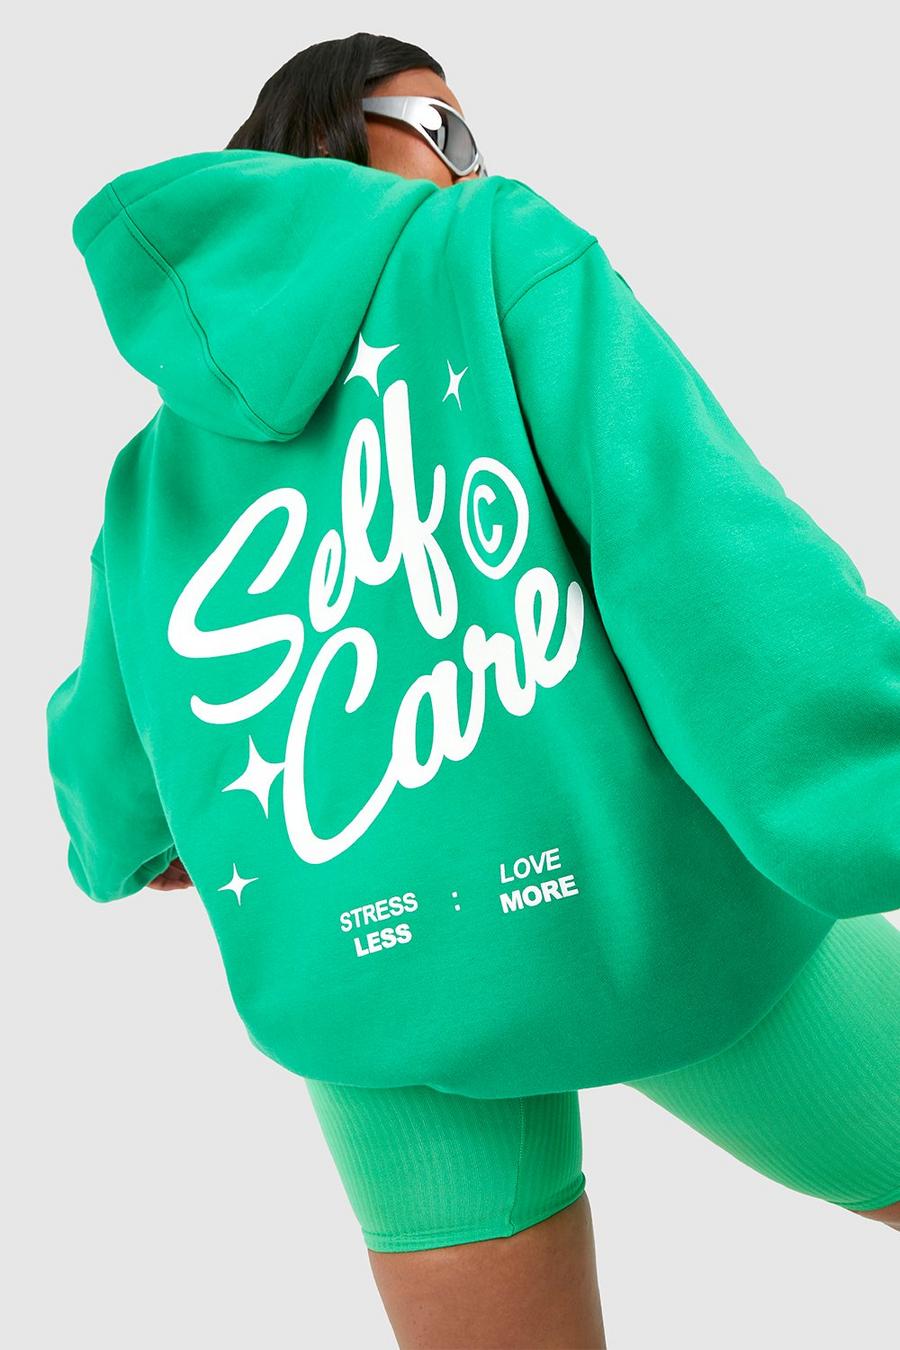 Grande taille - Sweat à capuche et slogan Self Care, Green